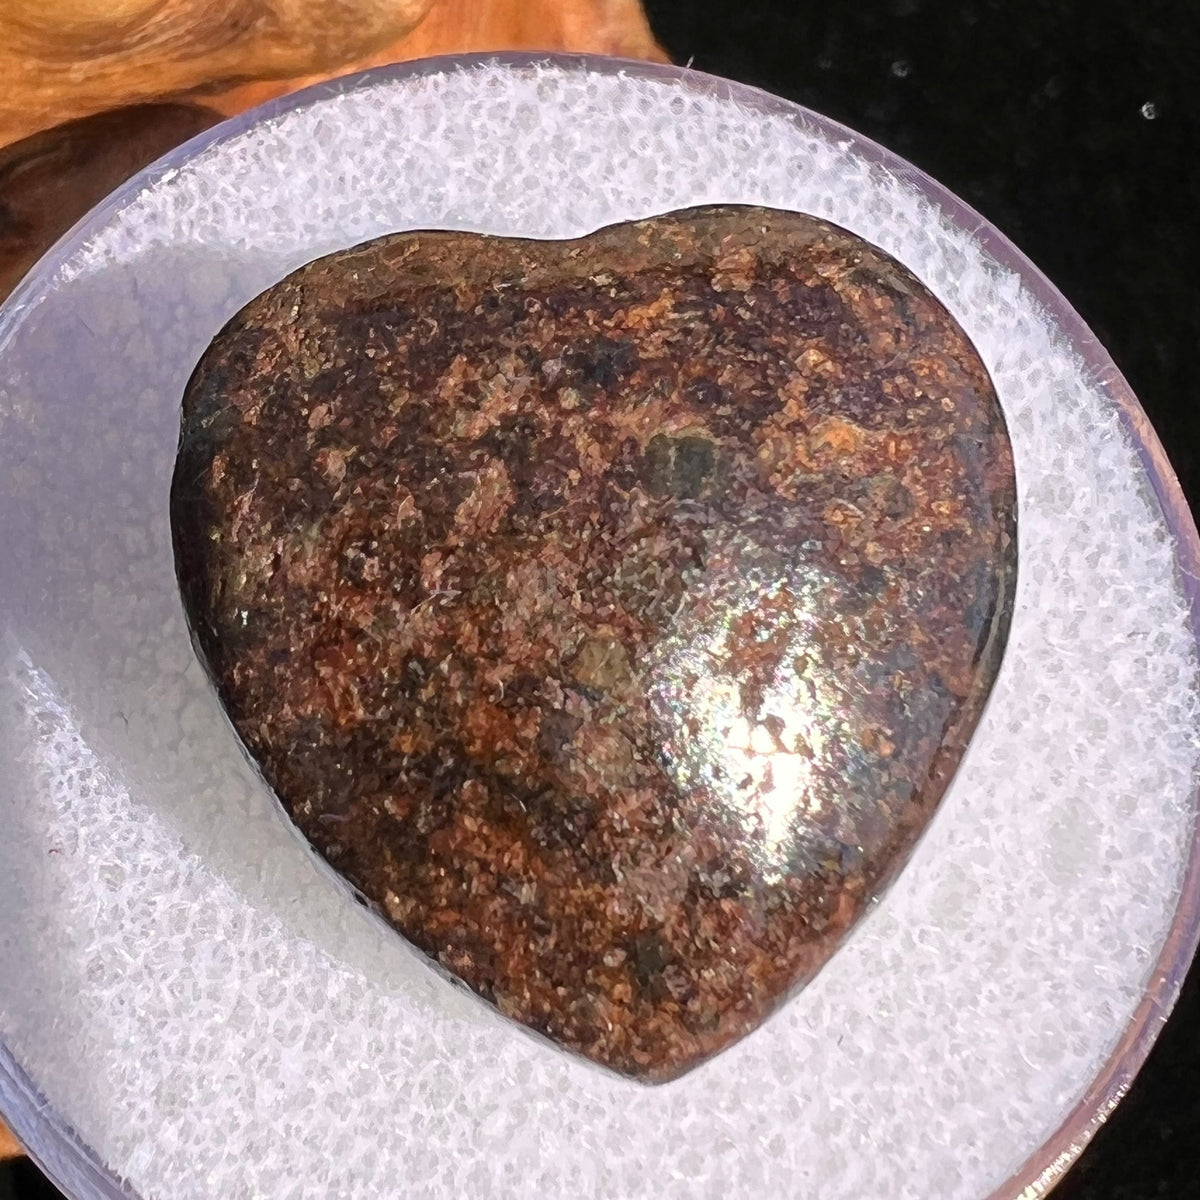 Meteorite Heart Bead for Jewelry Making #2-Moldavite Life